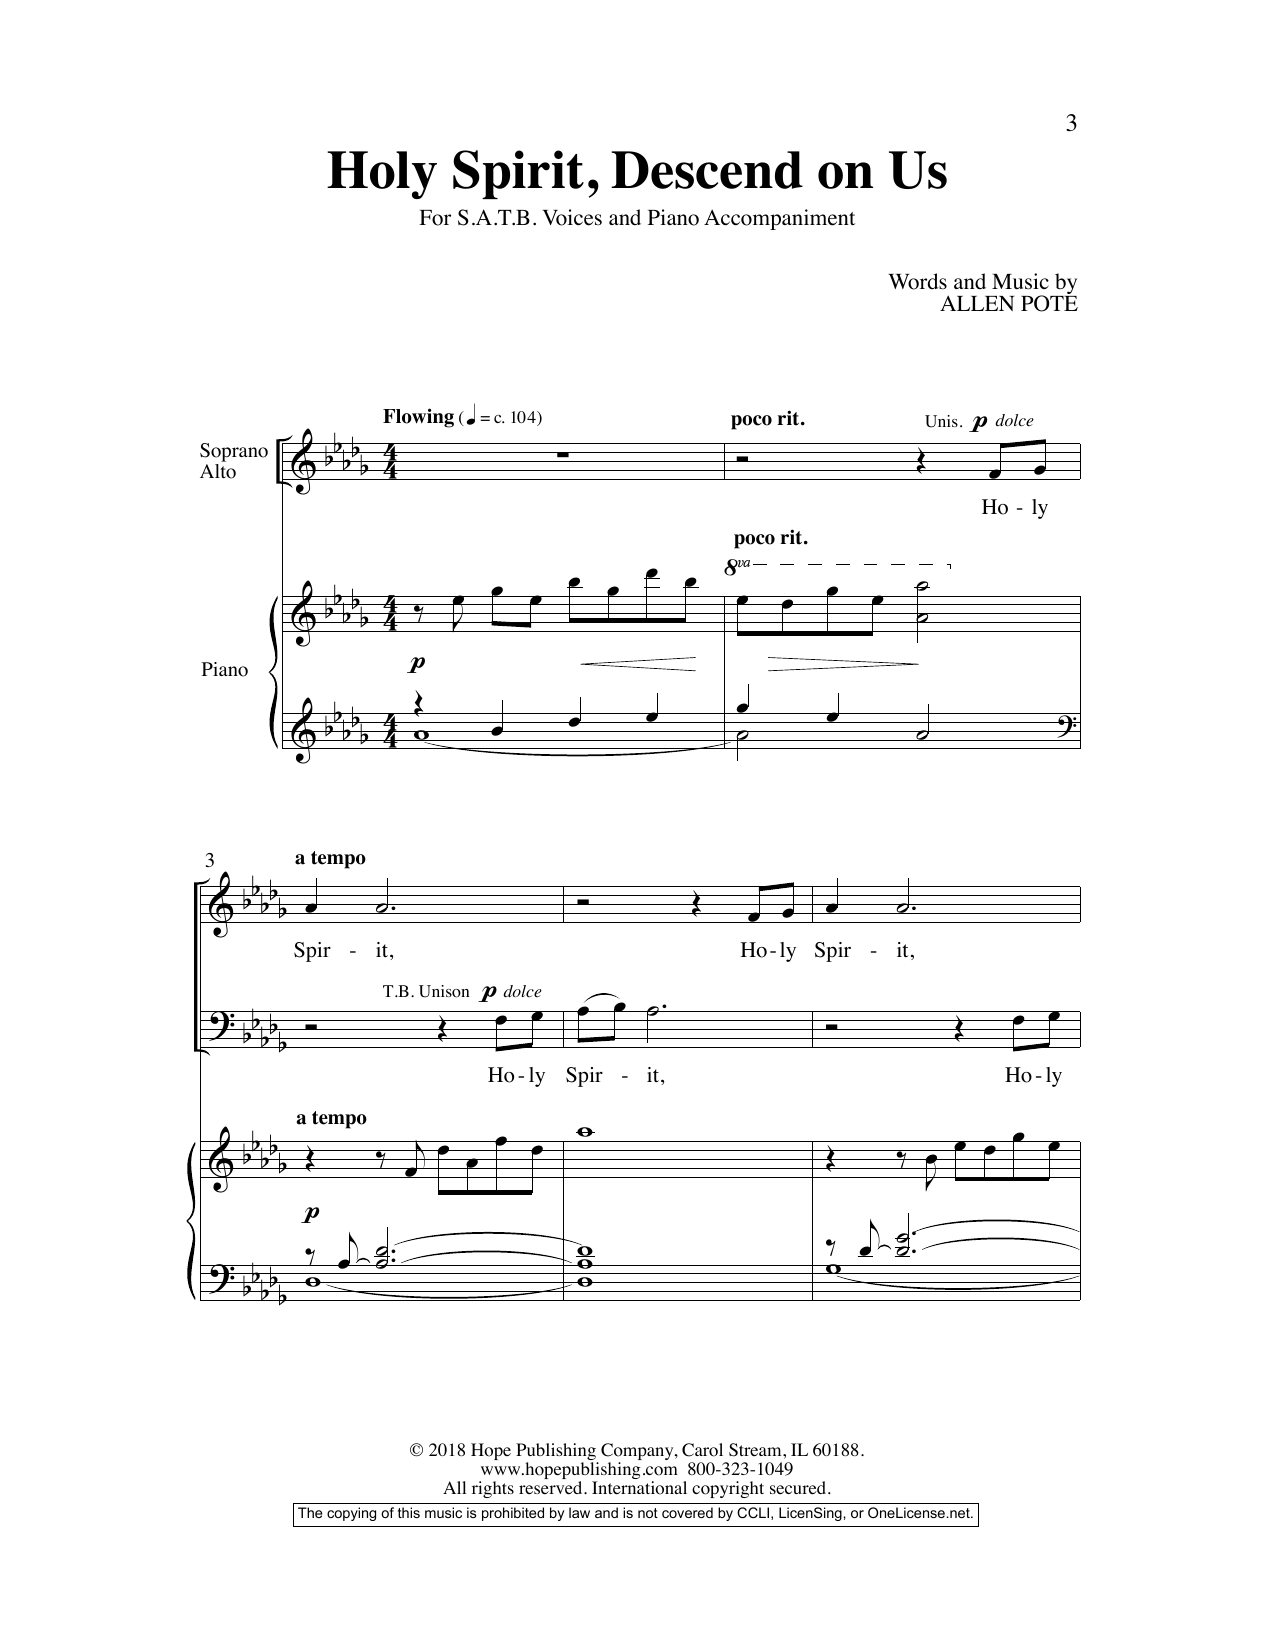 Allen Pote Holy Spirit, Descend On Us Sheet Music Notes & Chords for Choral - Download or Print PDF